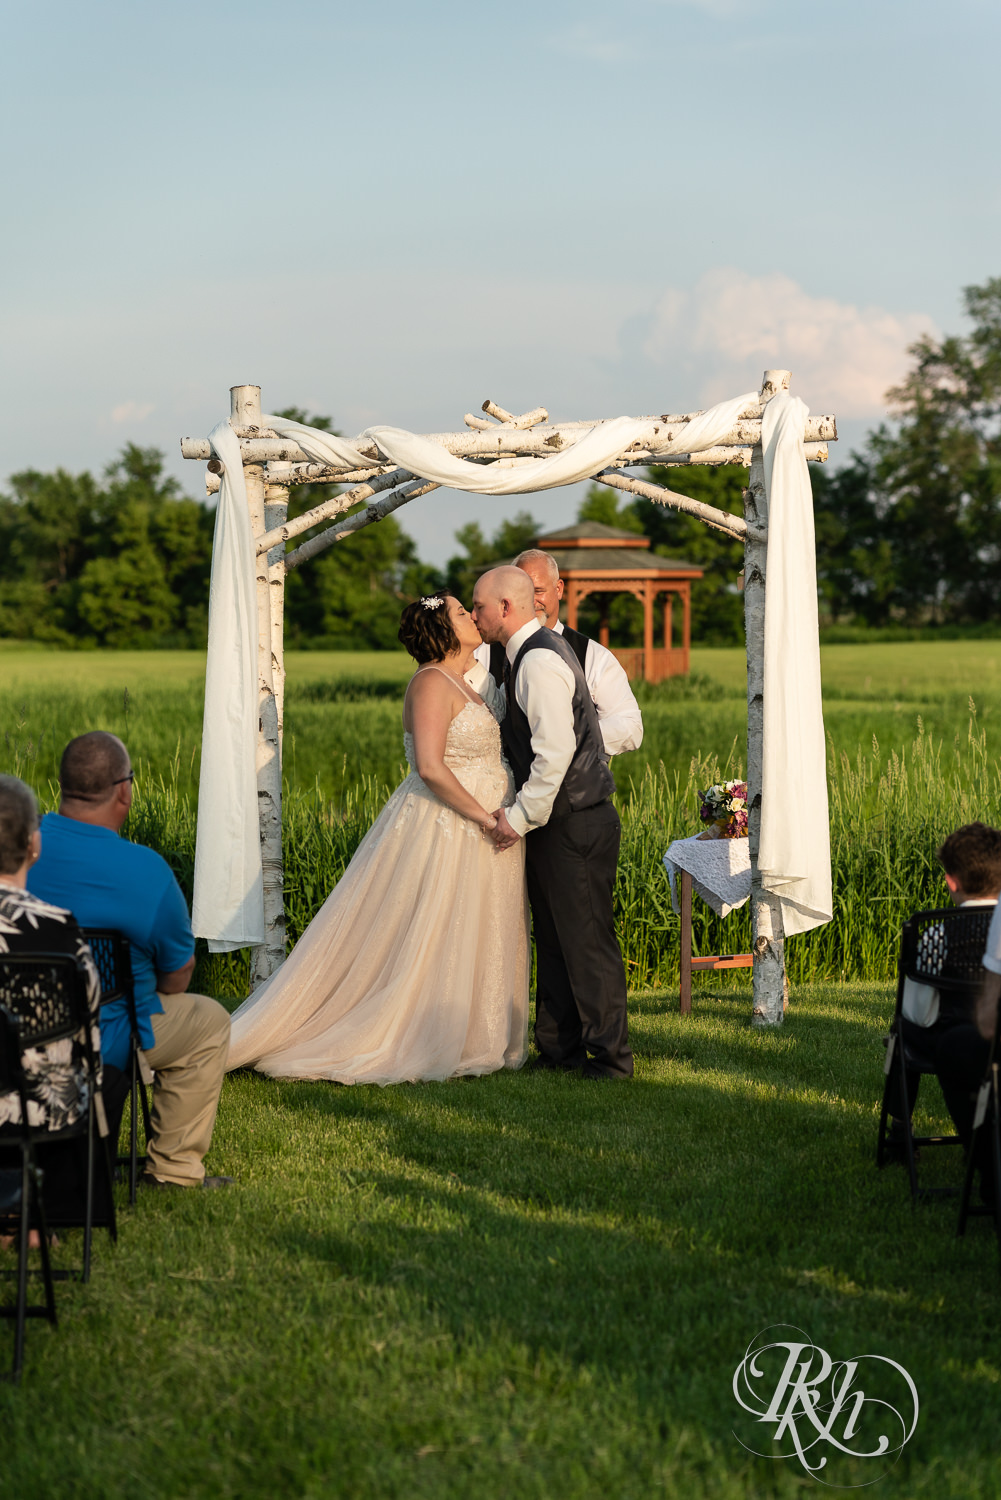 Bride and groom kiss at alter at sunset ceremony at Barn at Crocker's Creek in Faribault, Minnesota.